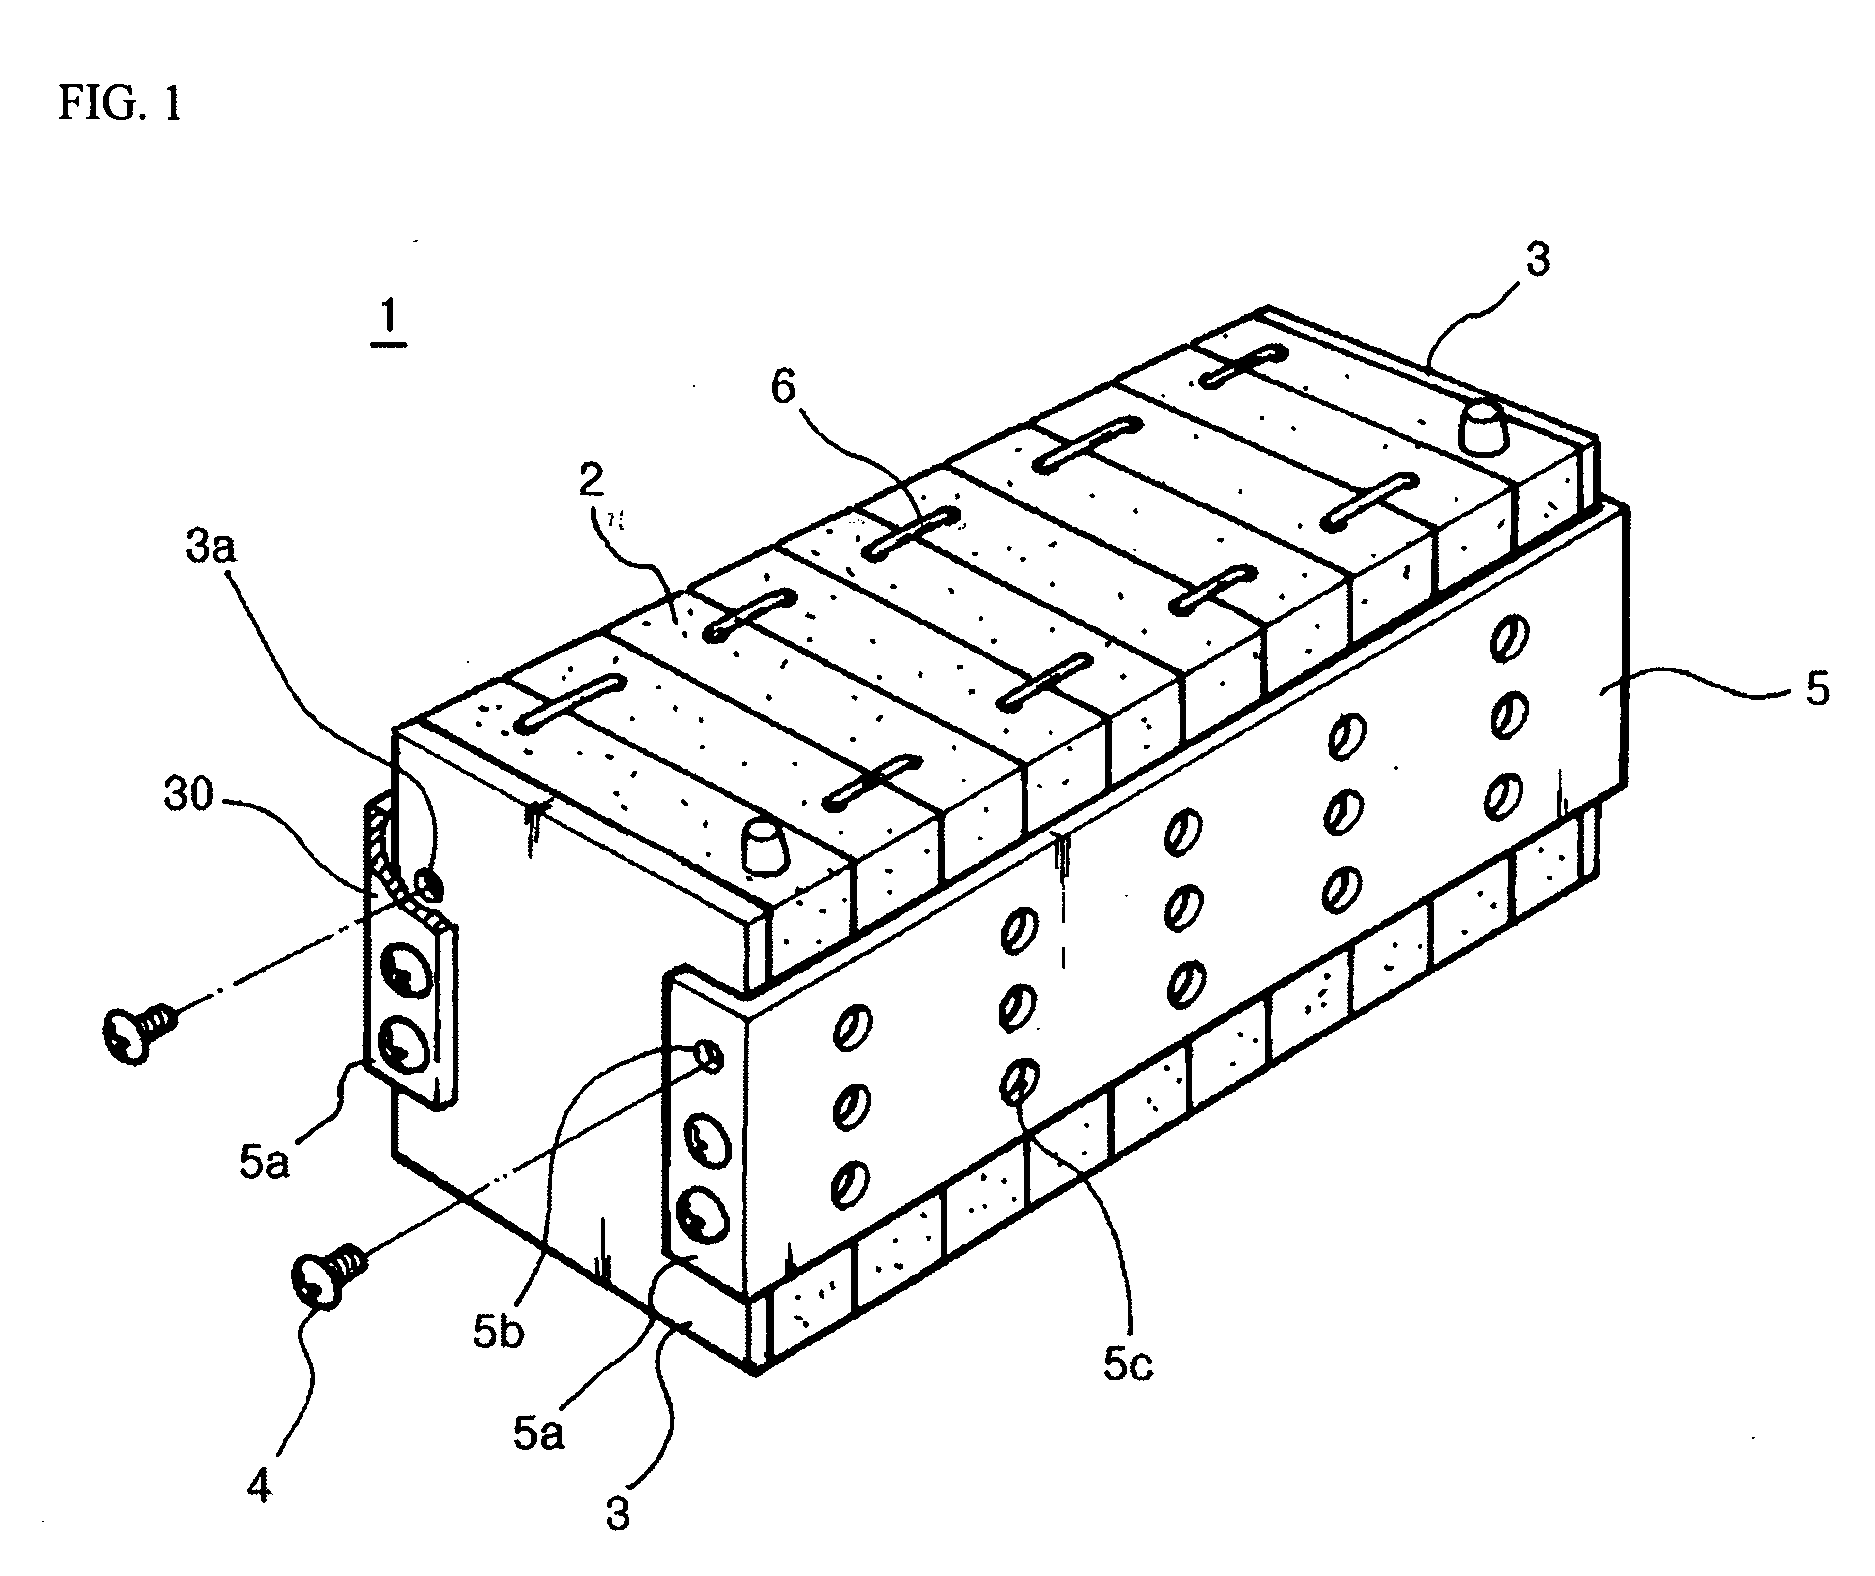 Secondary battery module